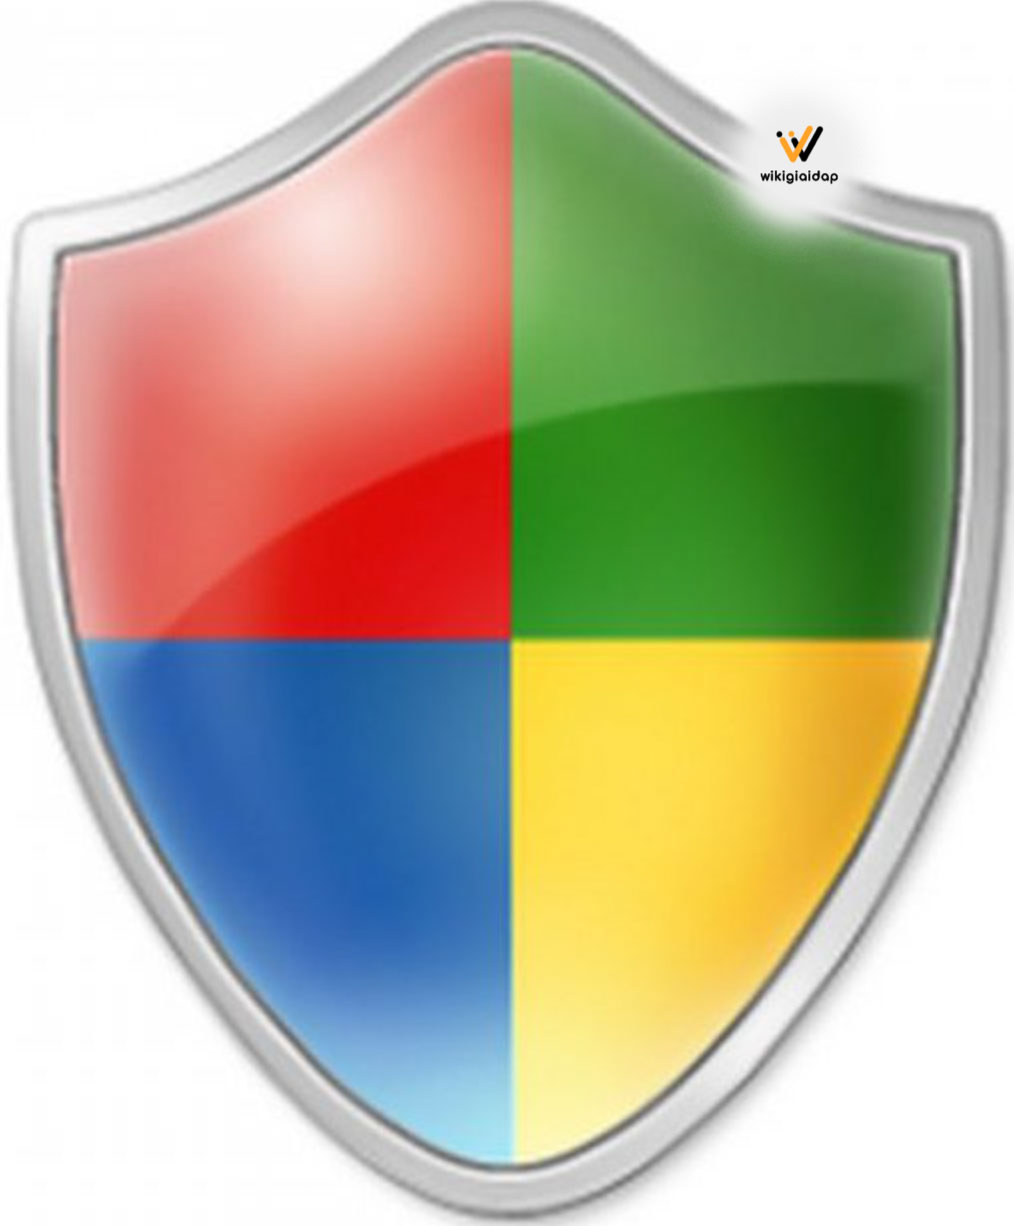 Giới thiệu về phần mềm Windows Firewall Control 6